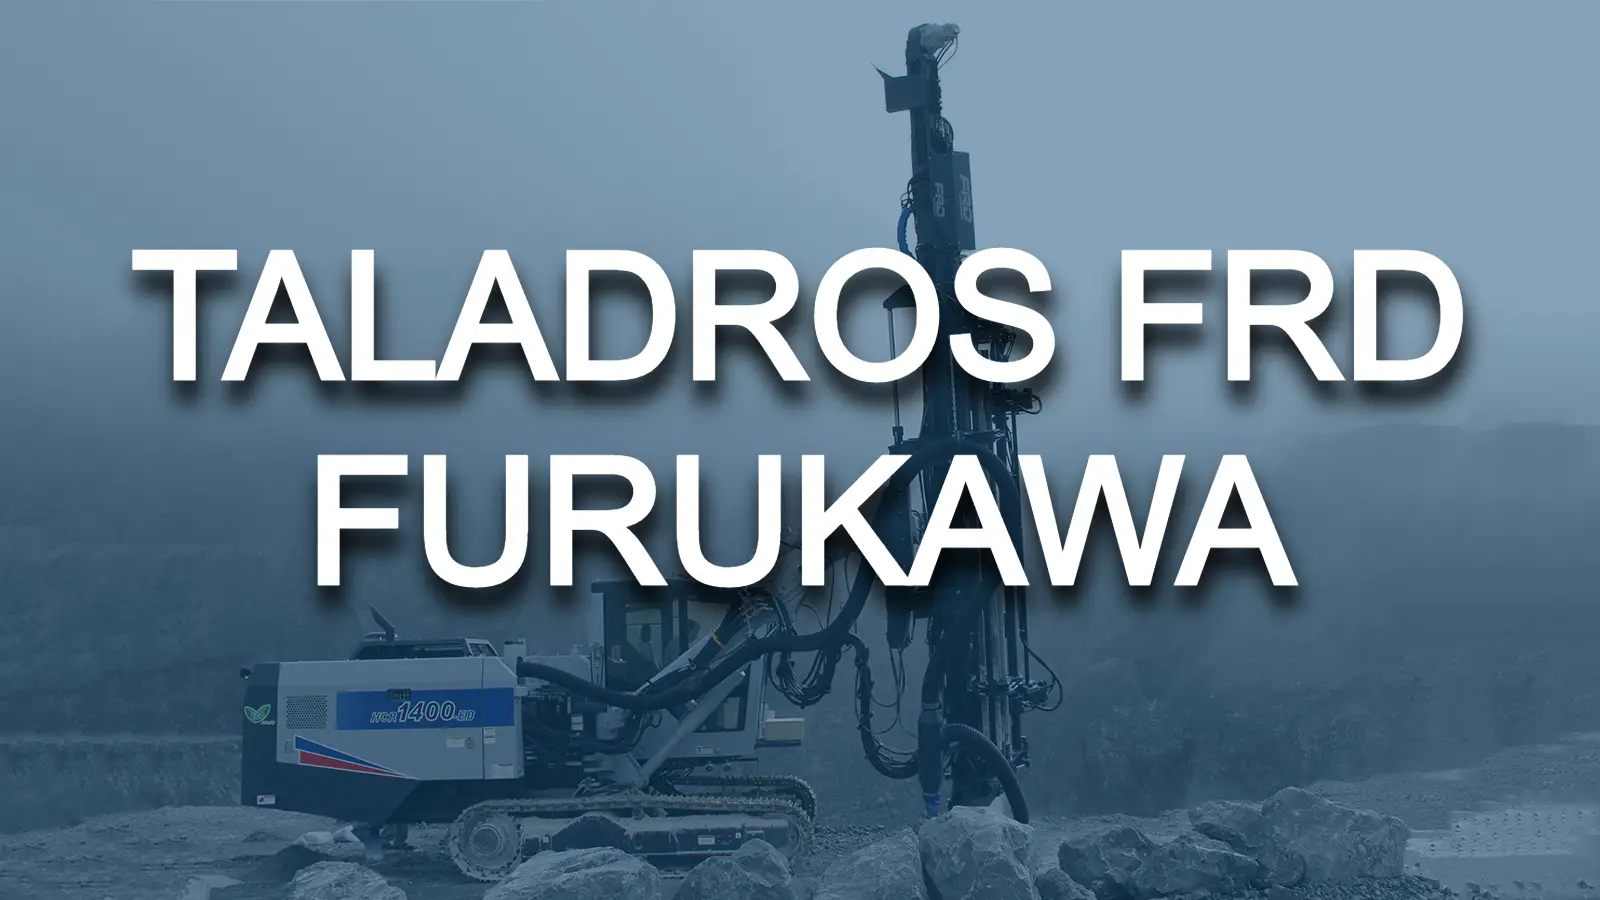 Repuestos-Taladros-FRD-Furukawa-Maquinaria-Pesada